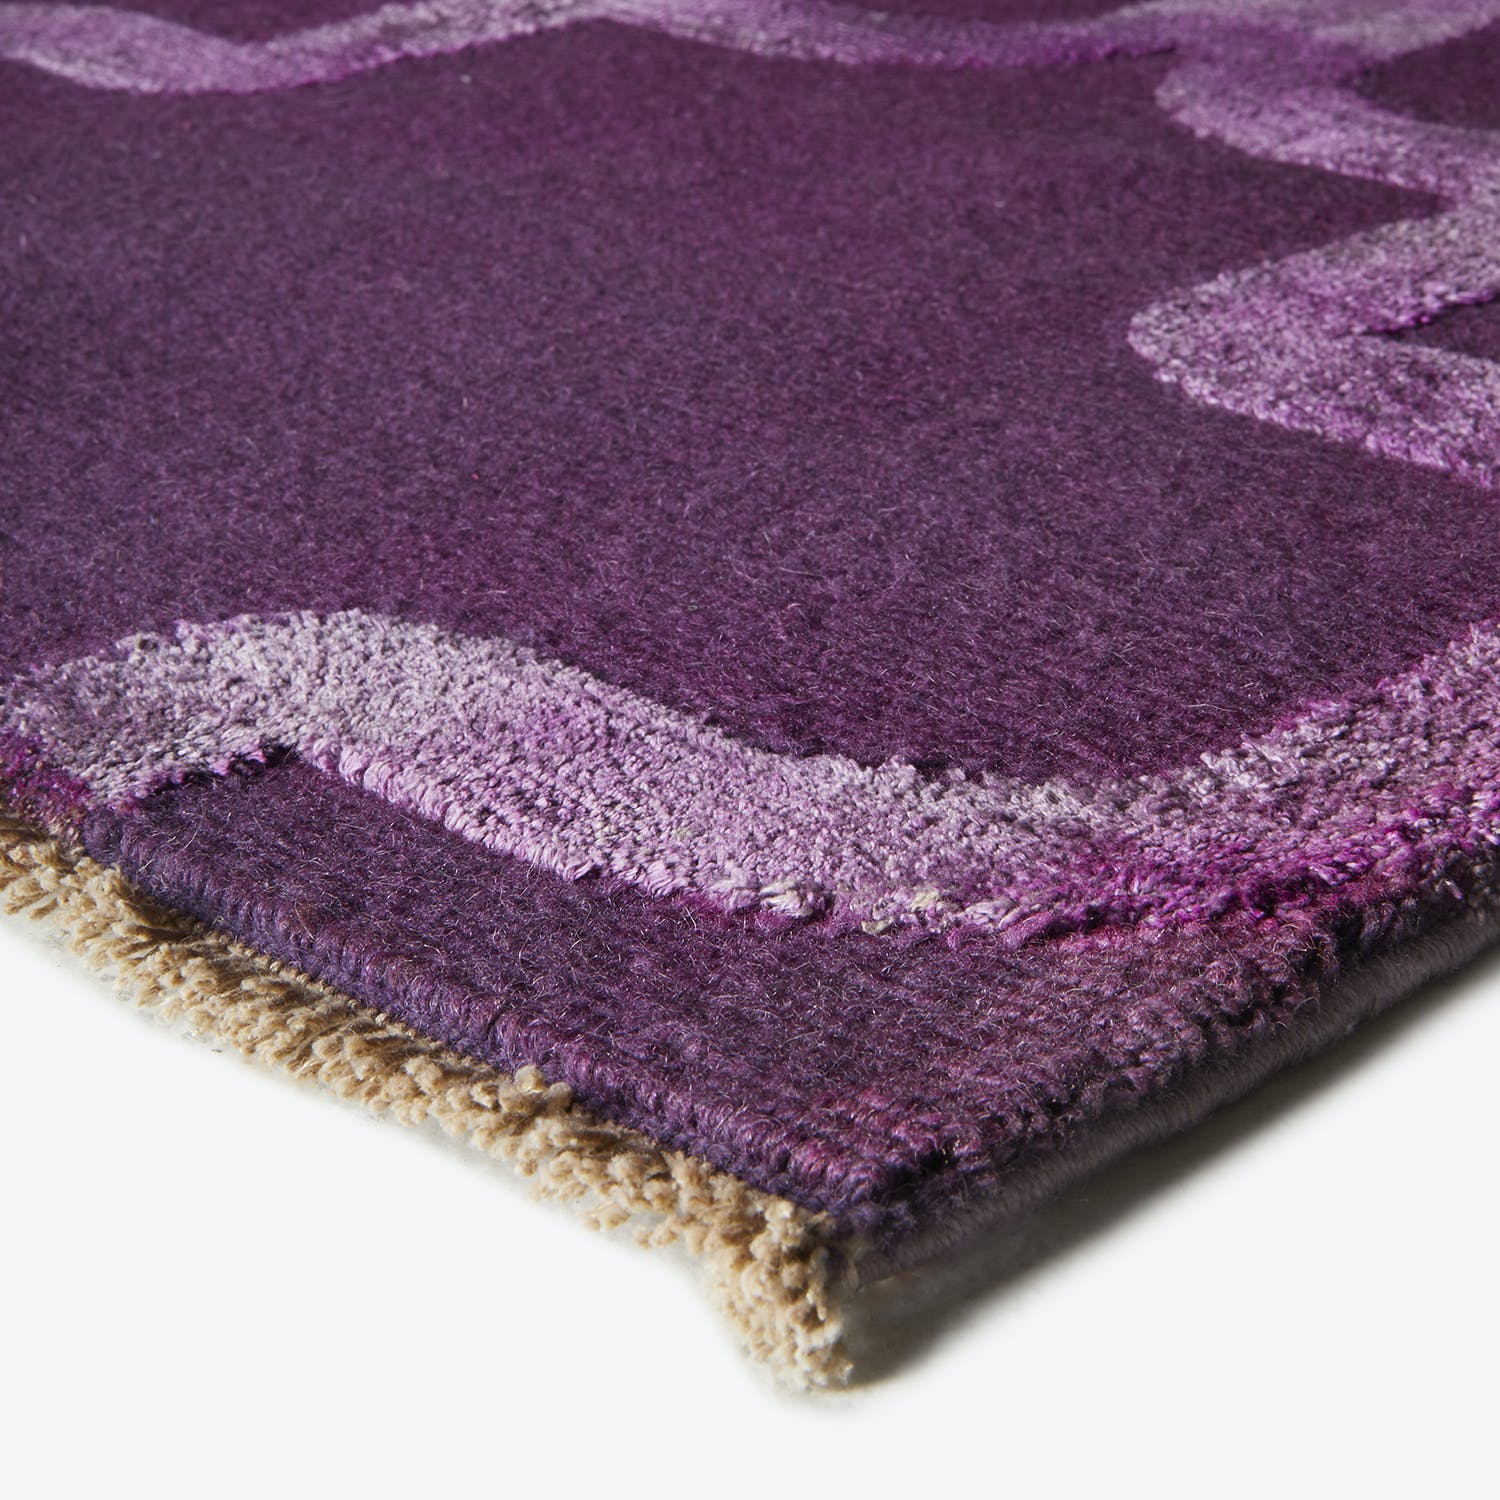 Close-up of a plush purple carpet, showcasing its soft texture.